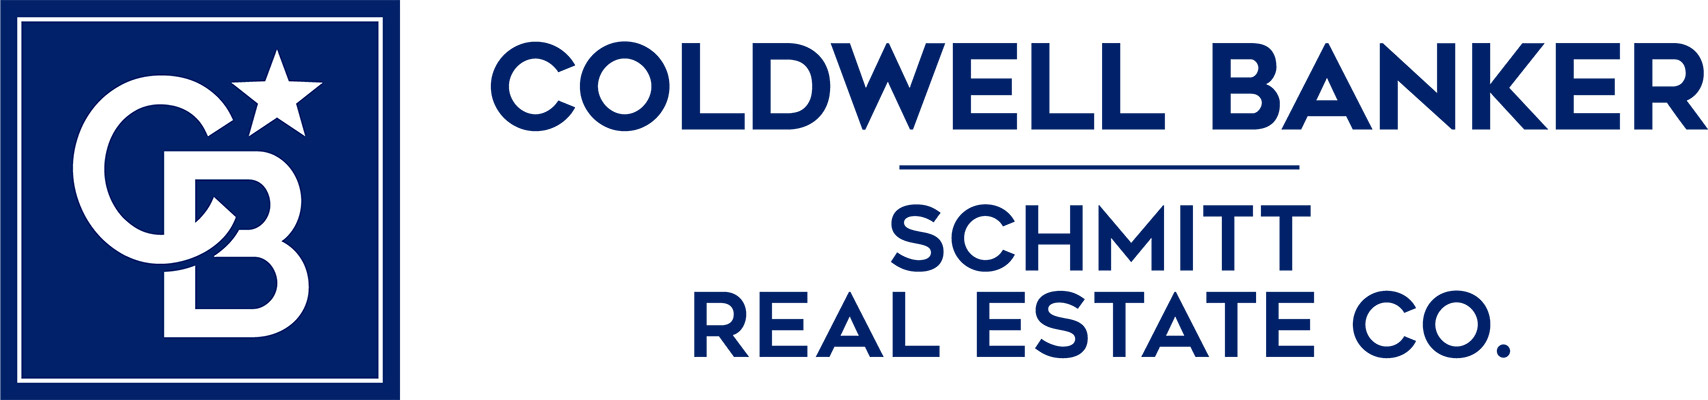 Karen Prince - Coldwell Banker Logo